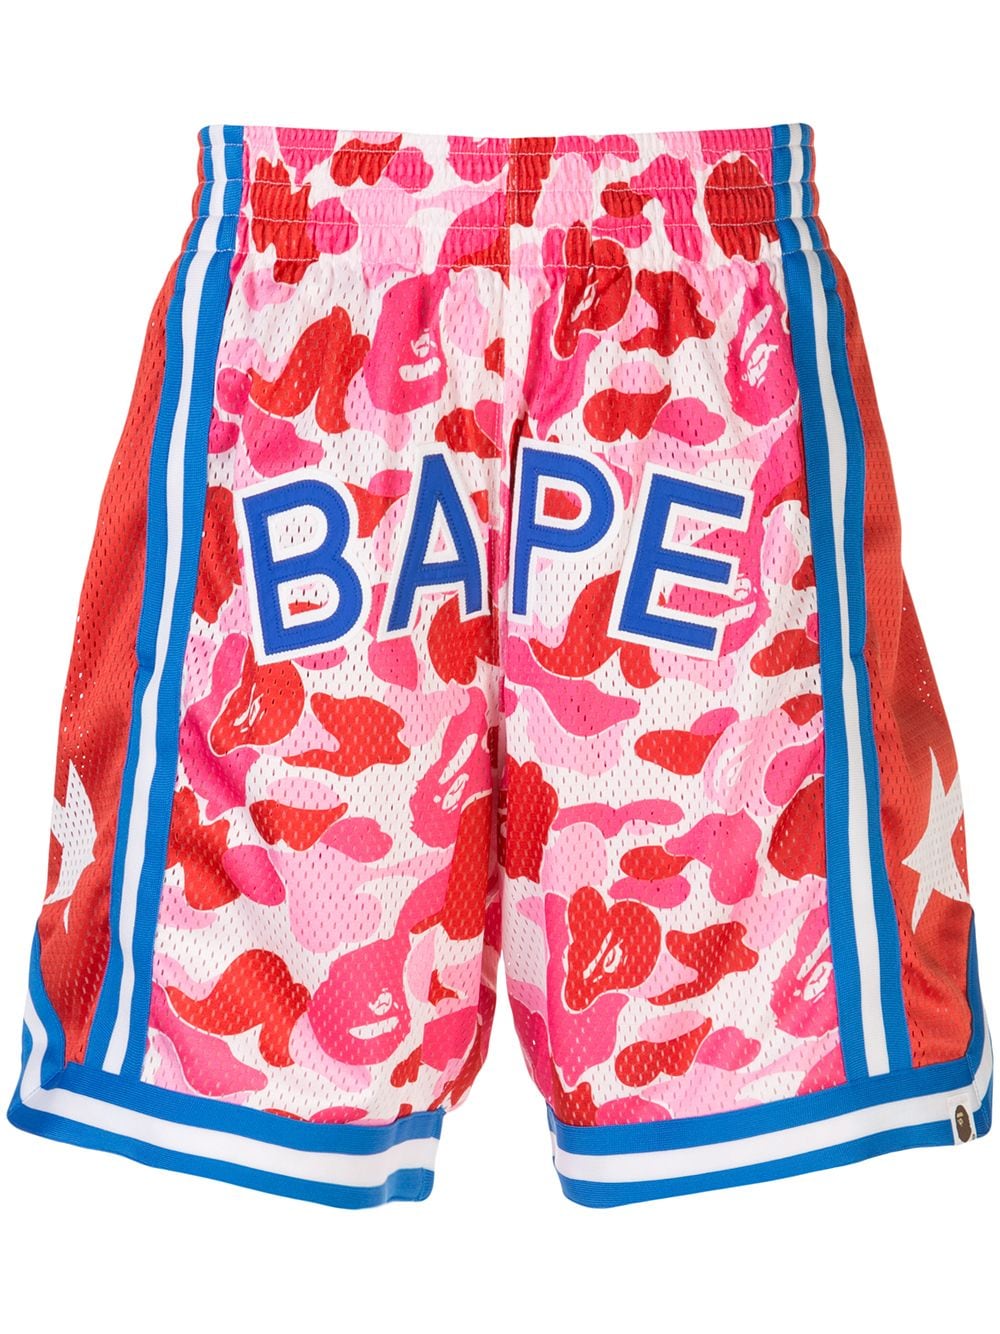 BAPE Jersey Shorts Pink (worn once)